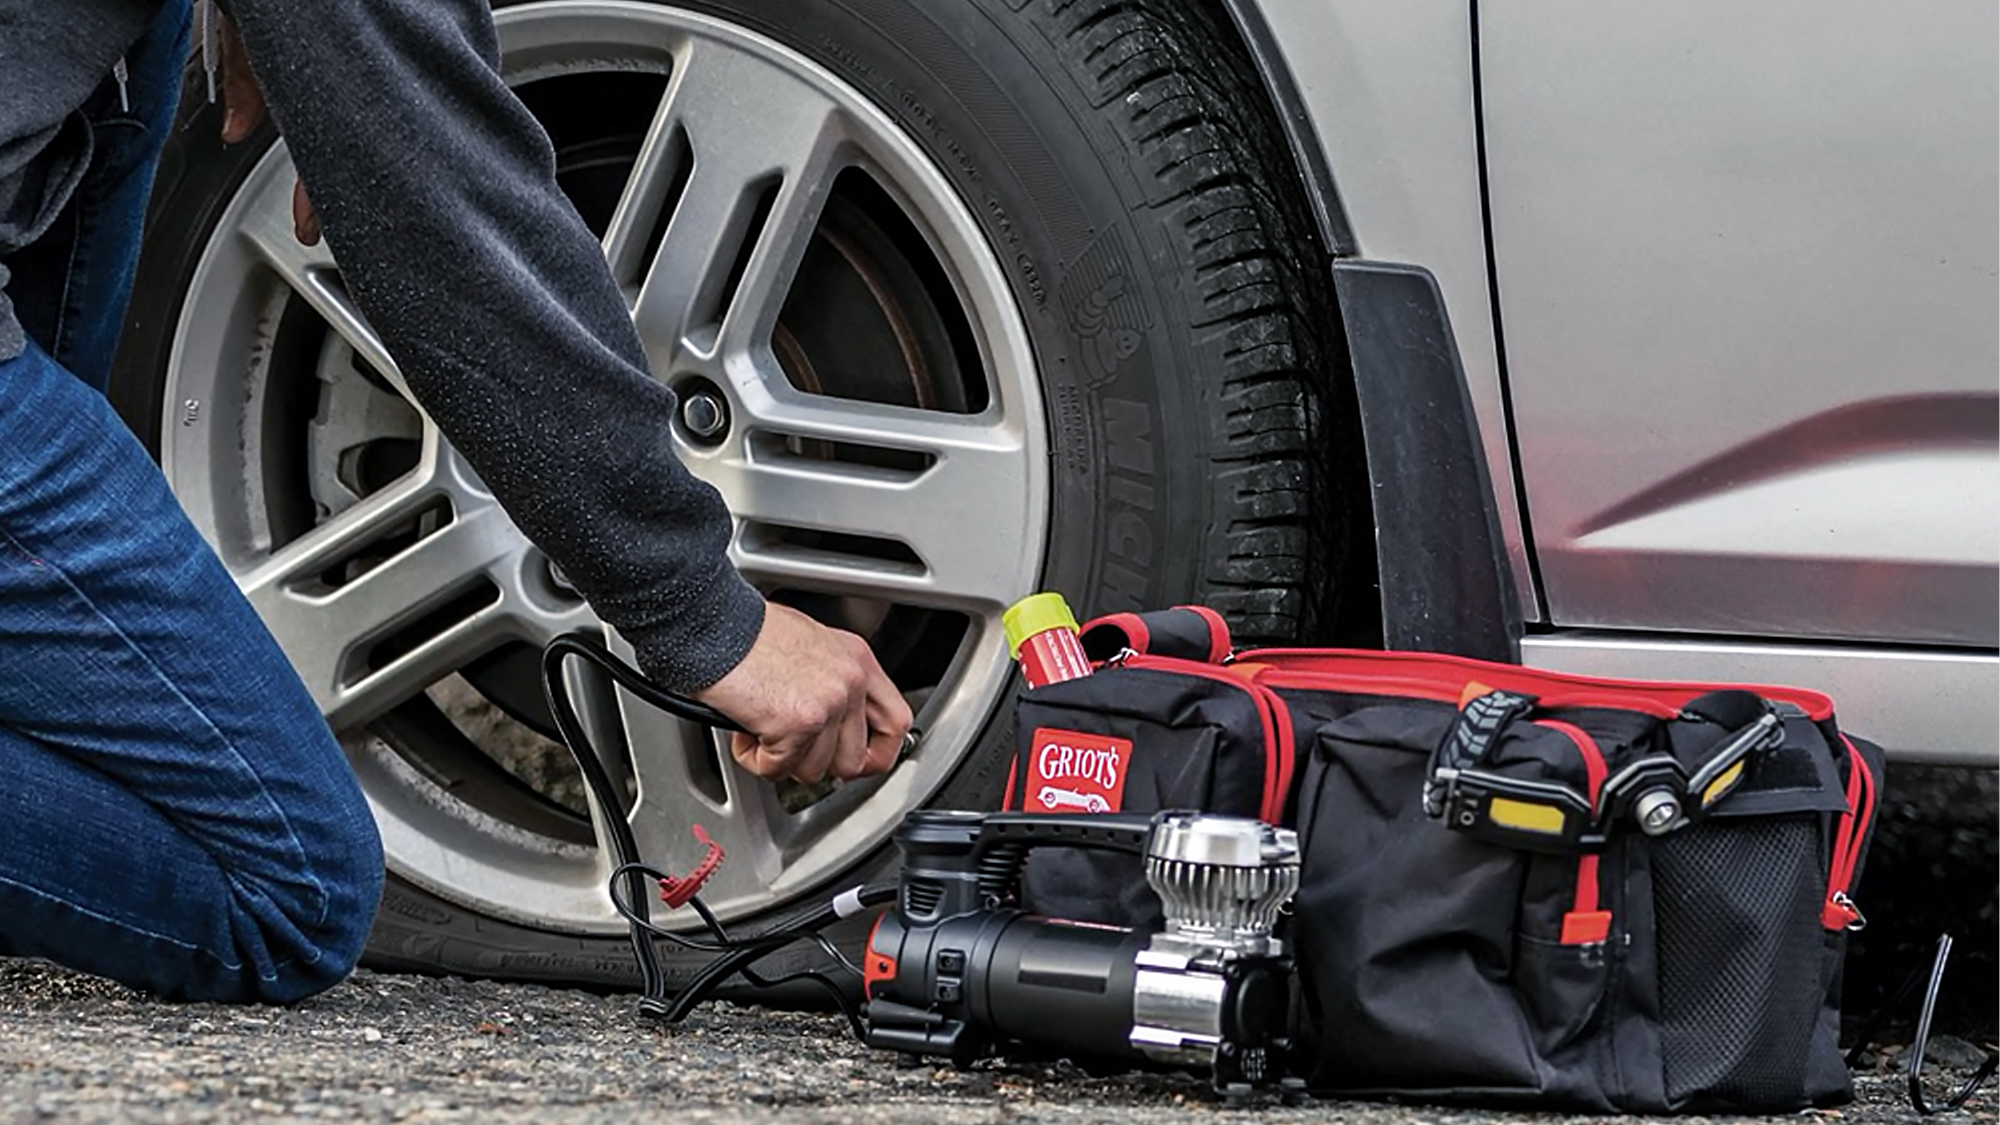 Roadside Assistance Emergency Car Kit - First Aid Kit, Jumper Cables, LED Flash